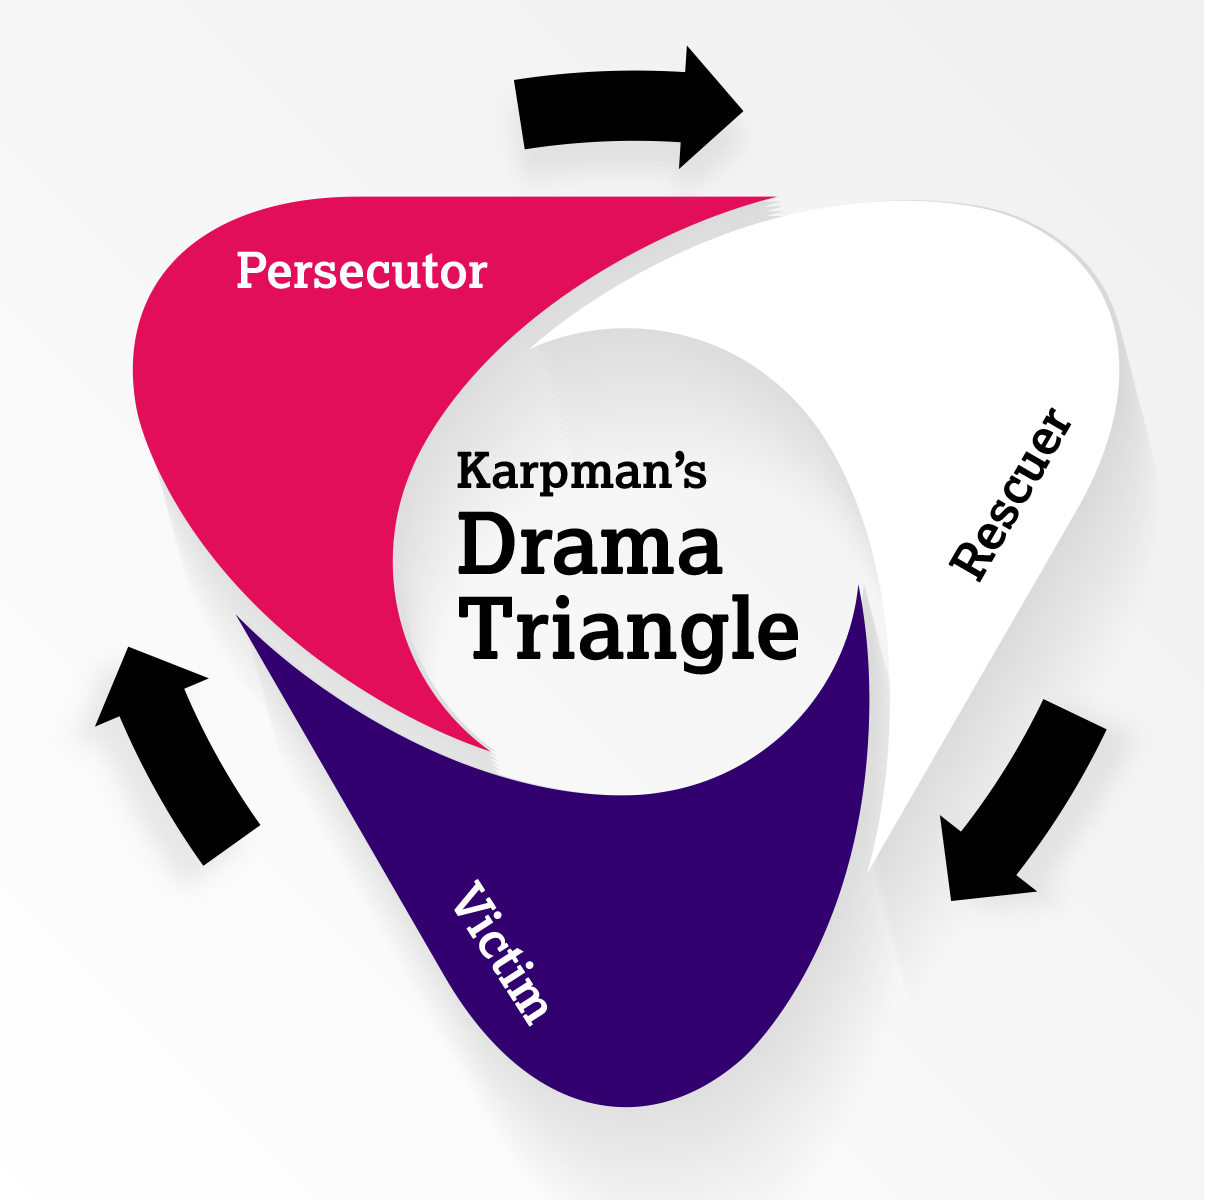 Karpman's Drama Triangle